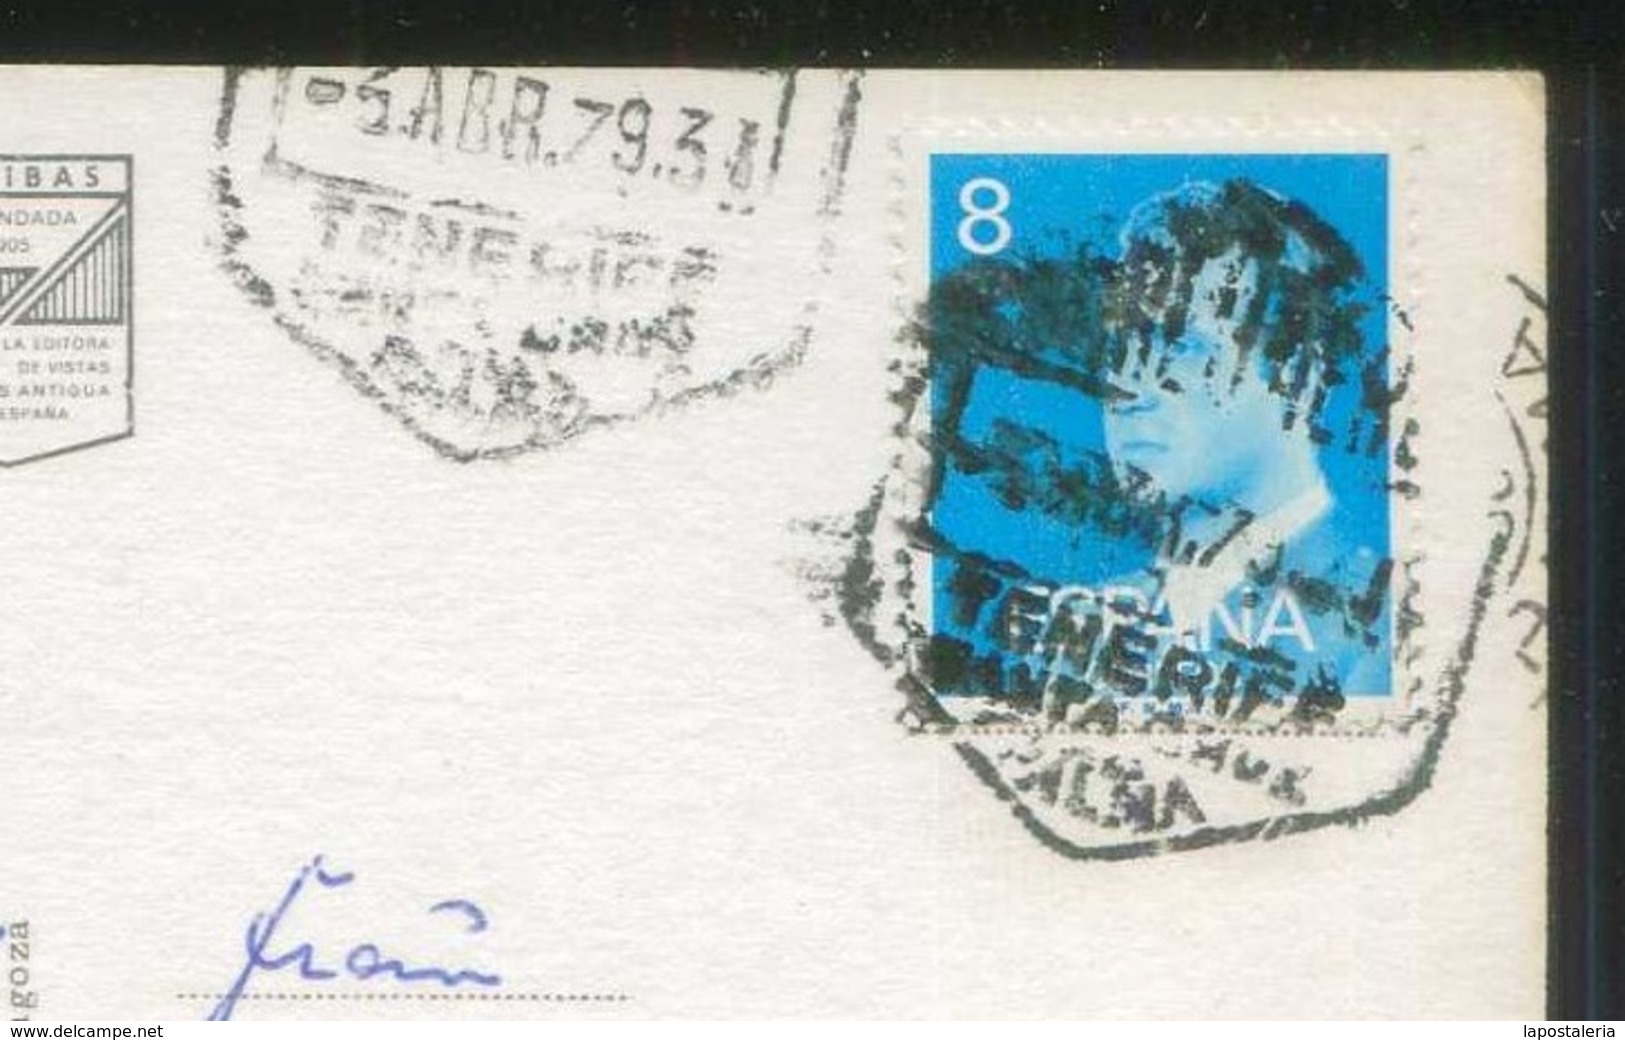 TP Circulada A Alemania El 5 Abr. 1979. Fechador *Correo Aéreo - Tenerife. Santa Cruz Palma* - Cartas & Documentos